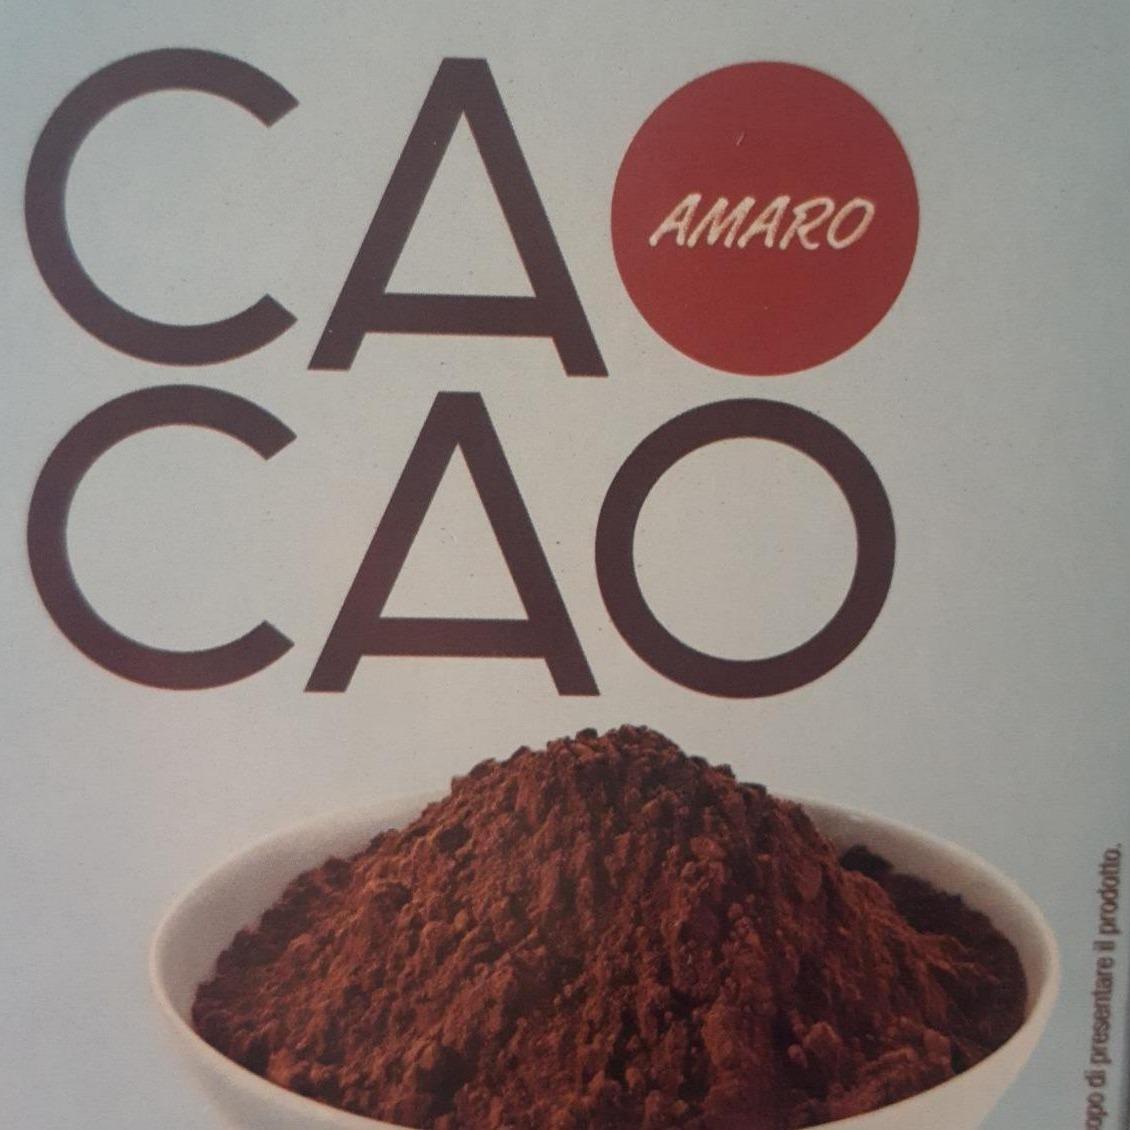 Фото - Cacao magro Unes